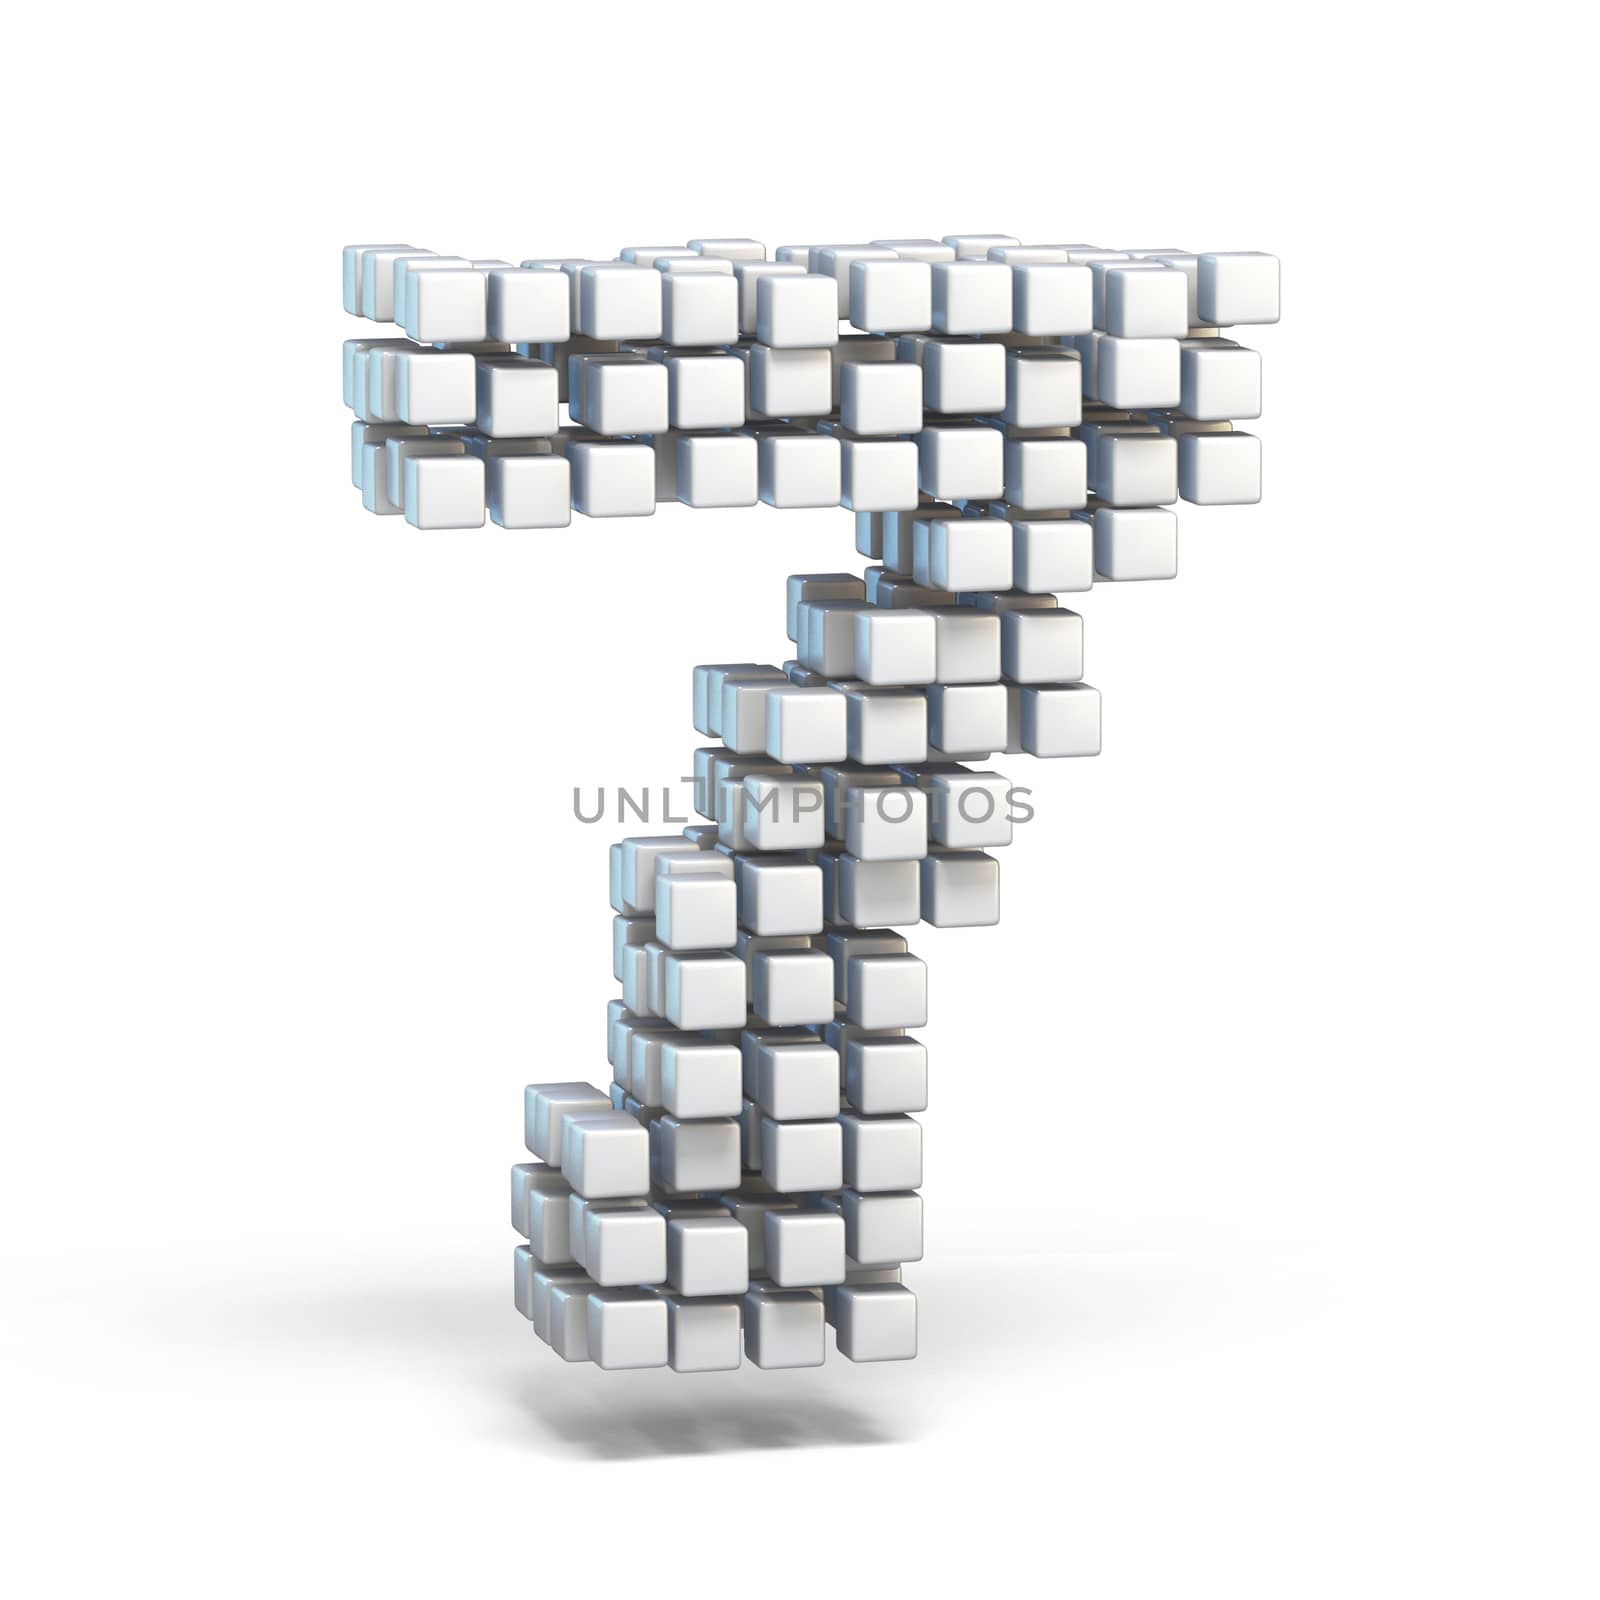 White voxel cubes font Number 7 SEVEN 3D render illustration isolated on white background